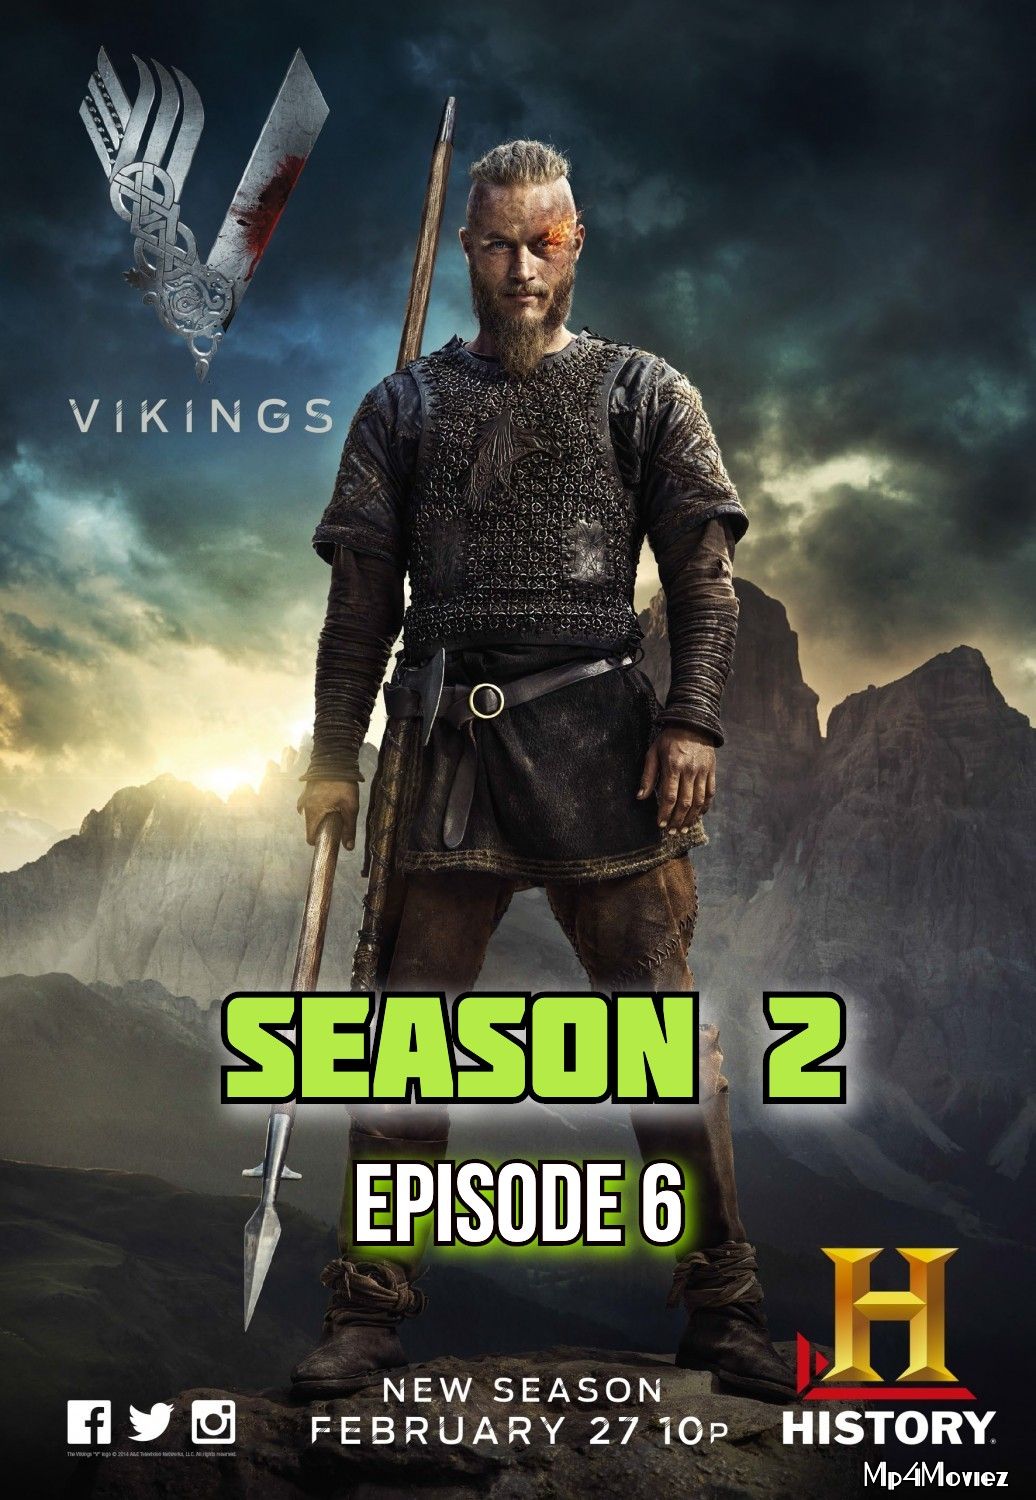 Vikings S02E06 (Unforgiven) Hindi Dubbed download full movie